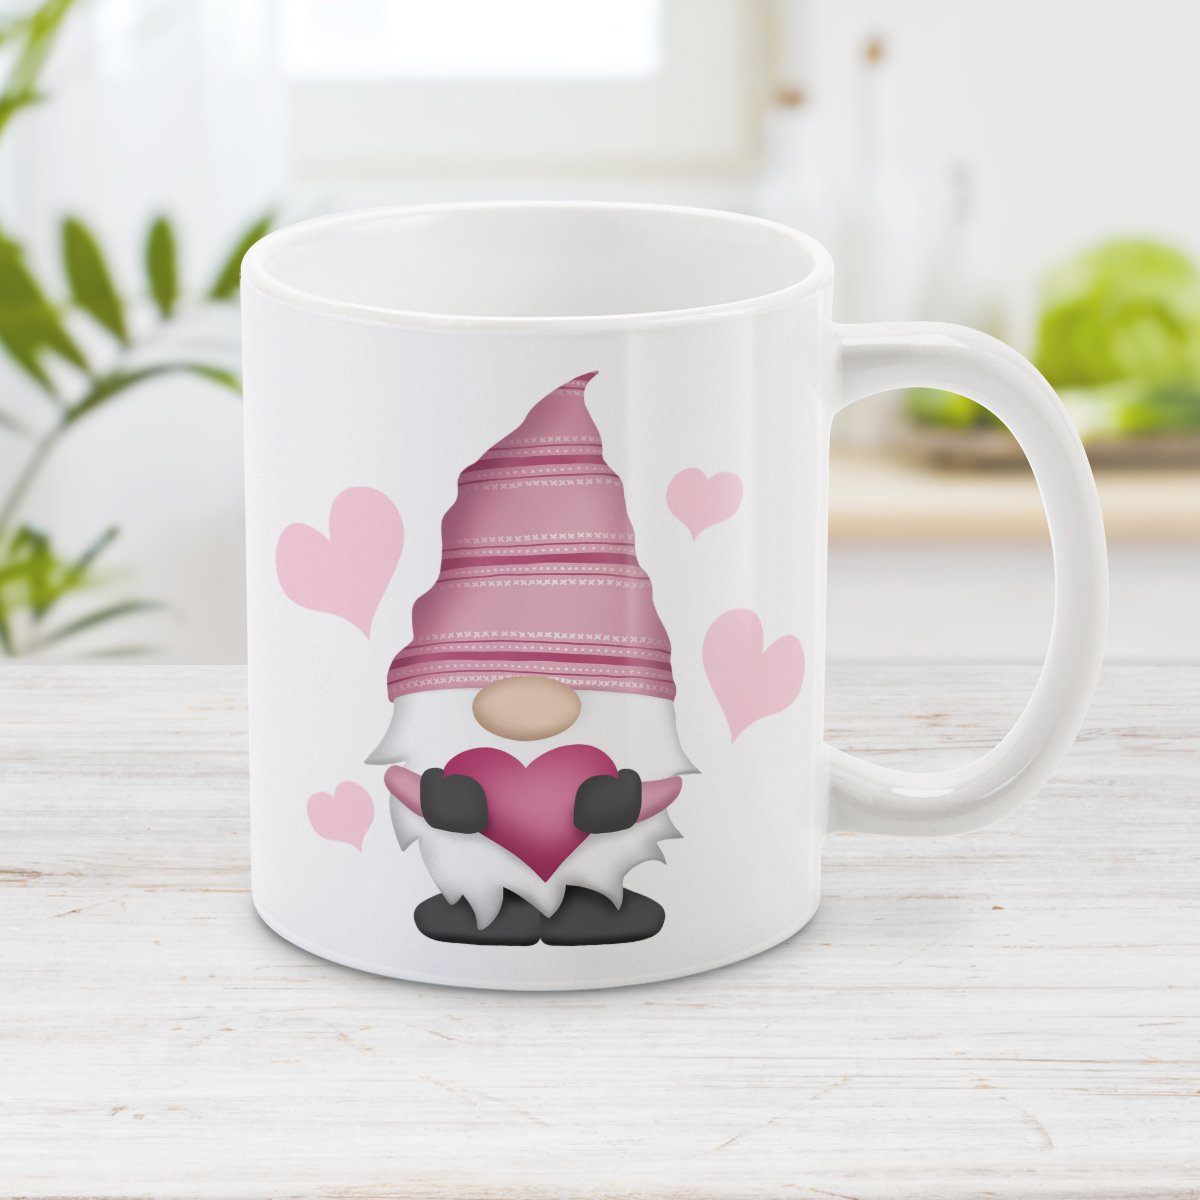 Pink Heart Gnome Mug at Amy's Coffee Mugs